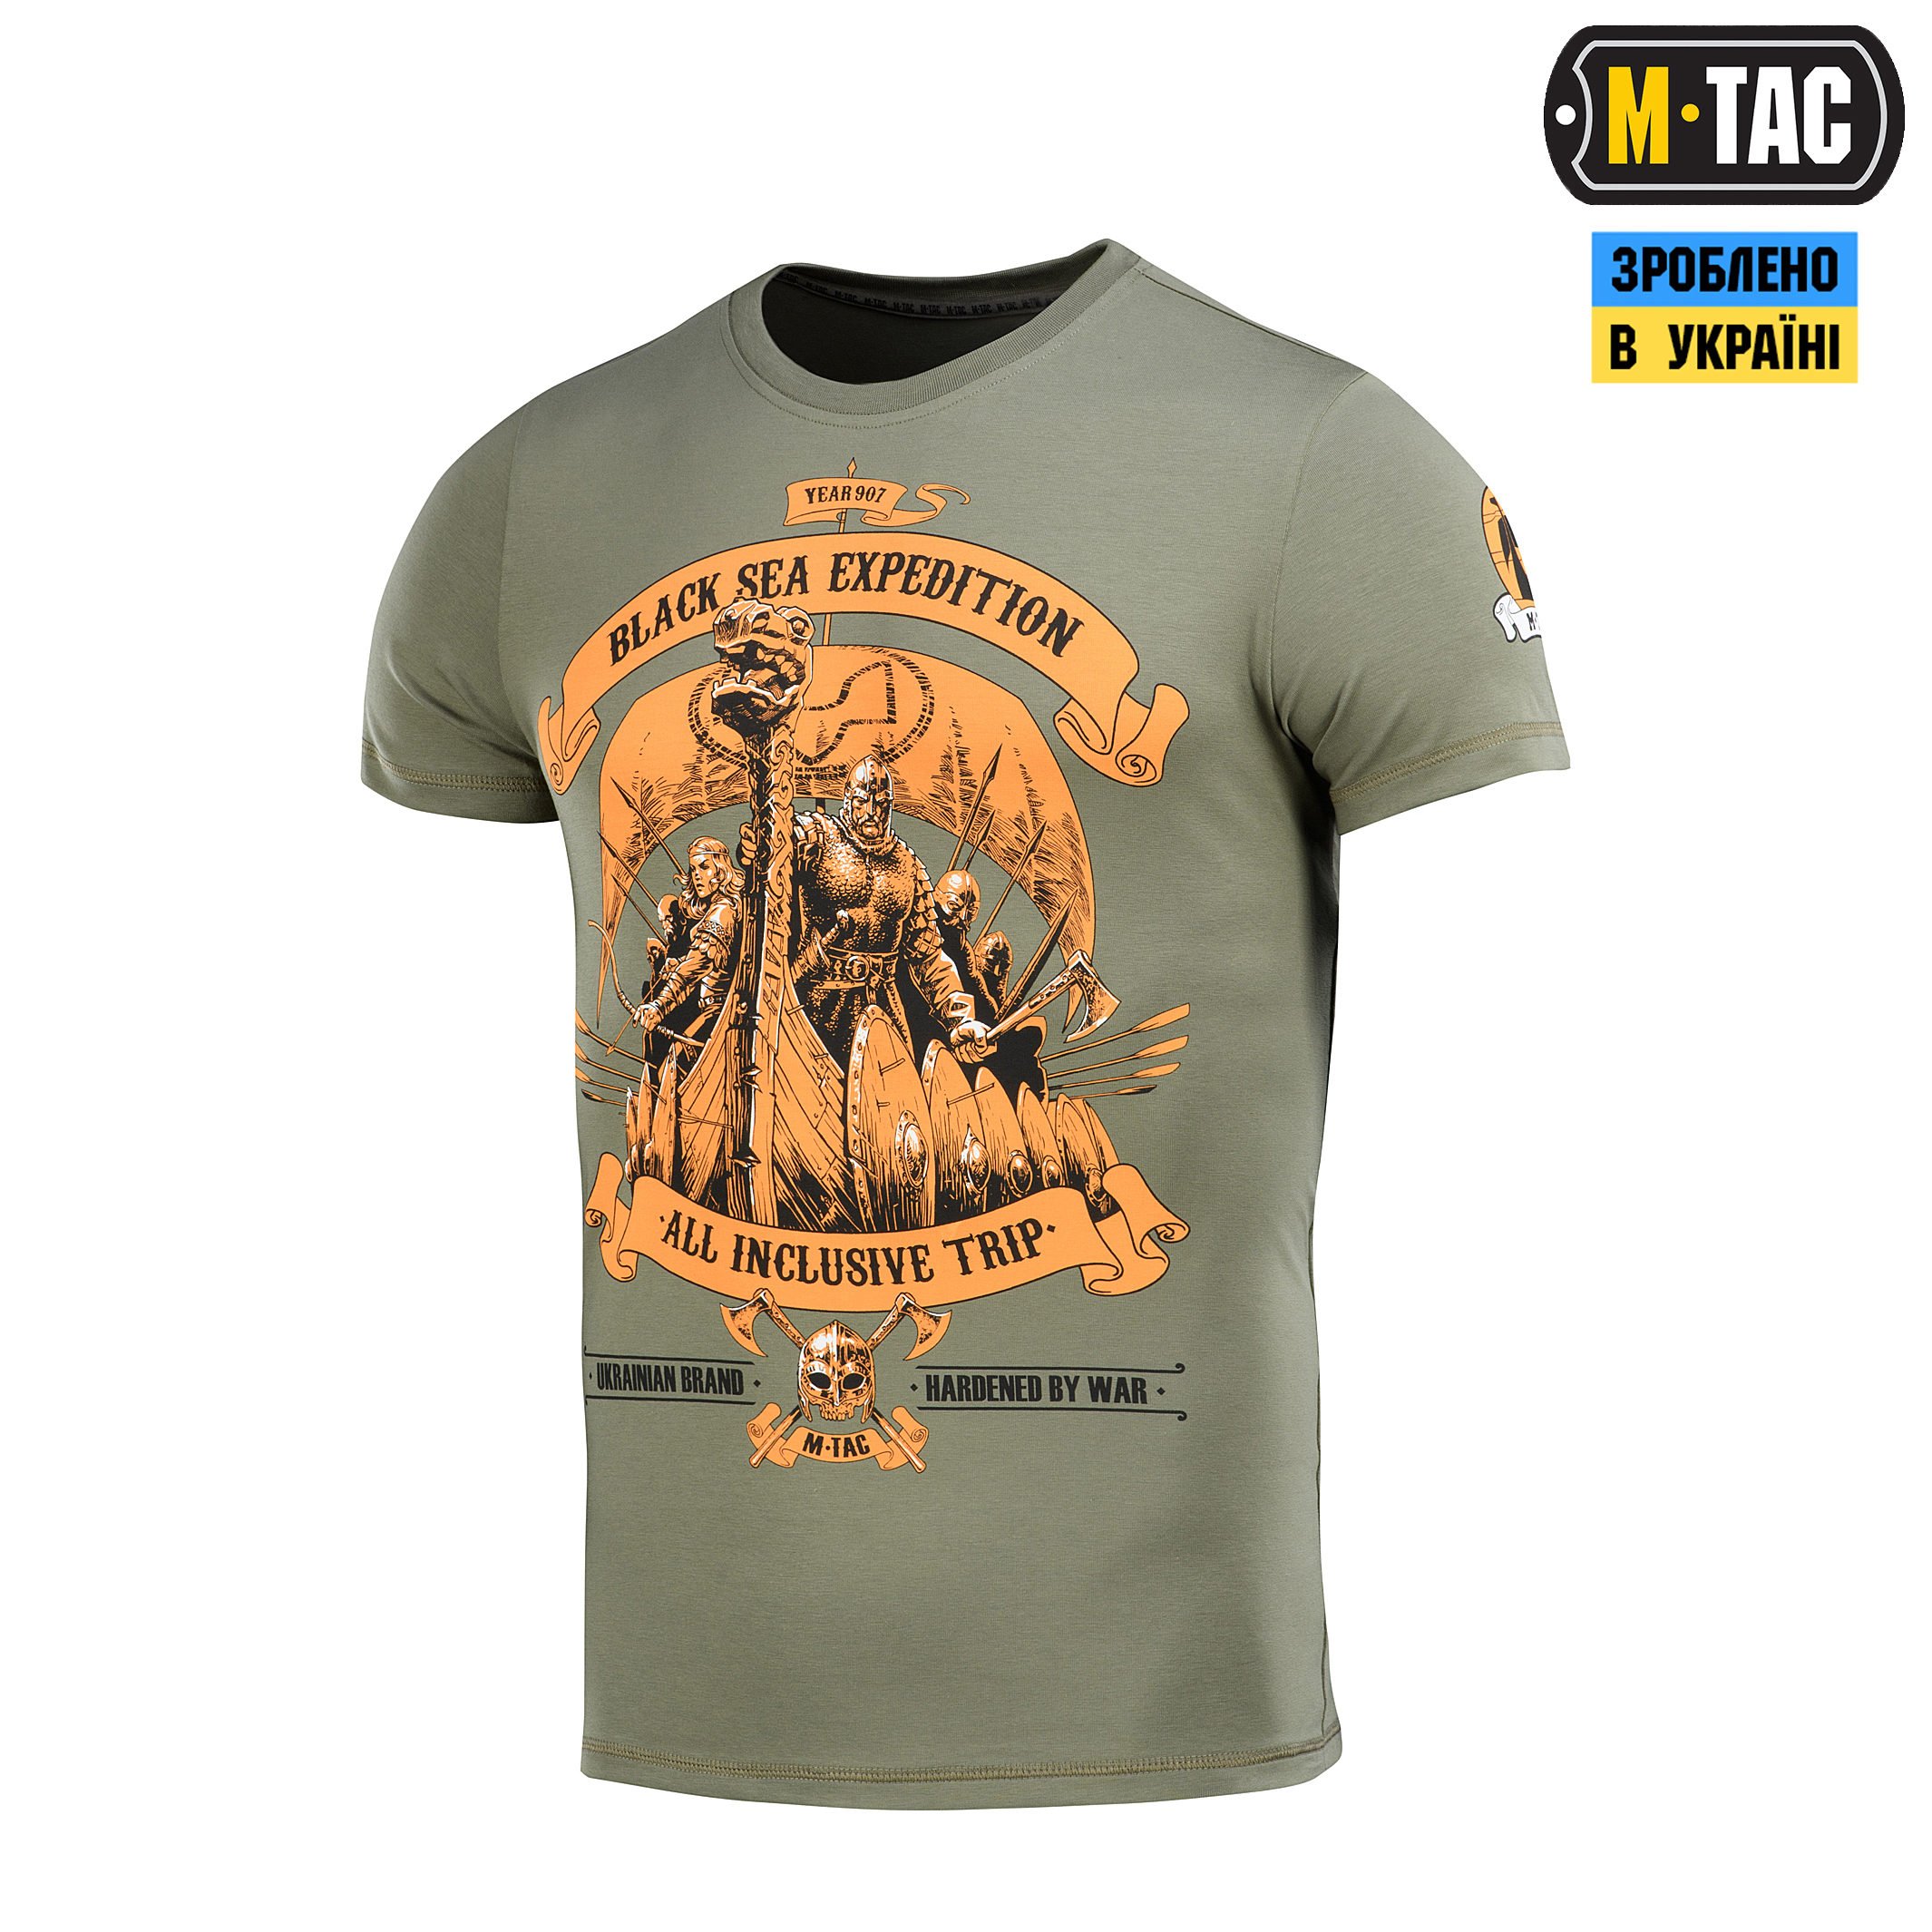 M-Tac футболка Black Sea Expedition Light Olive